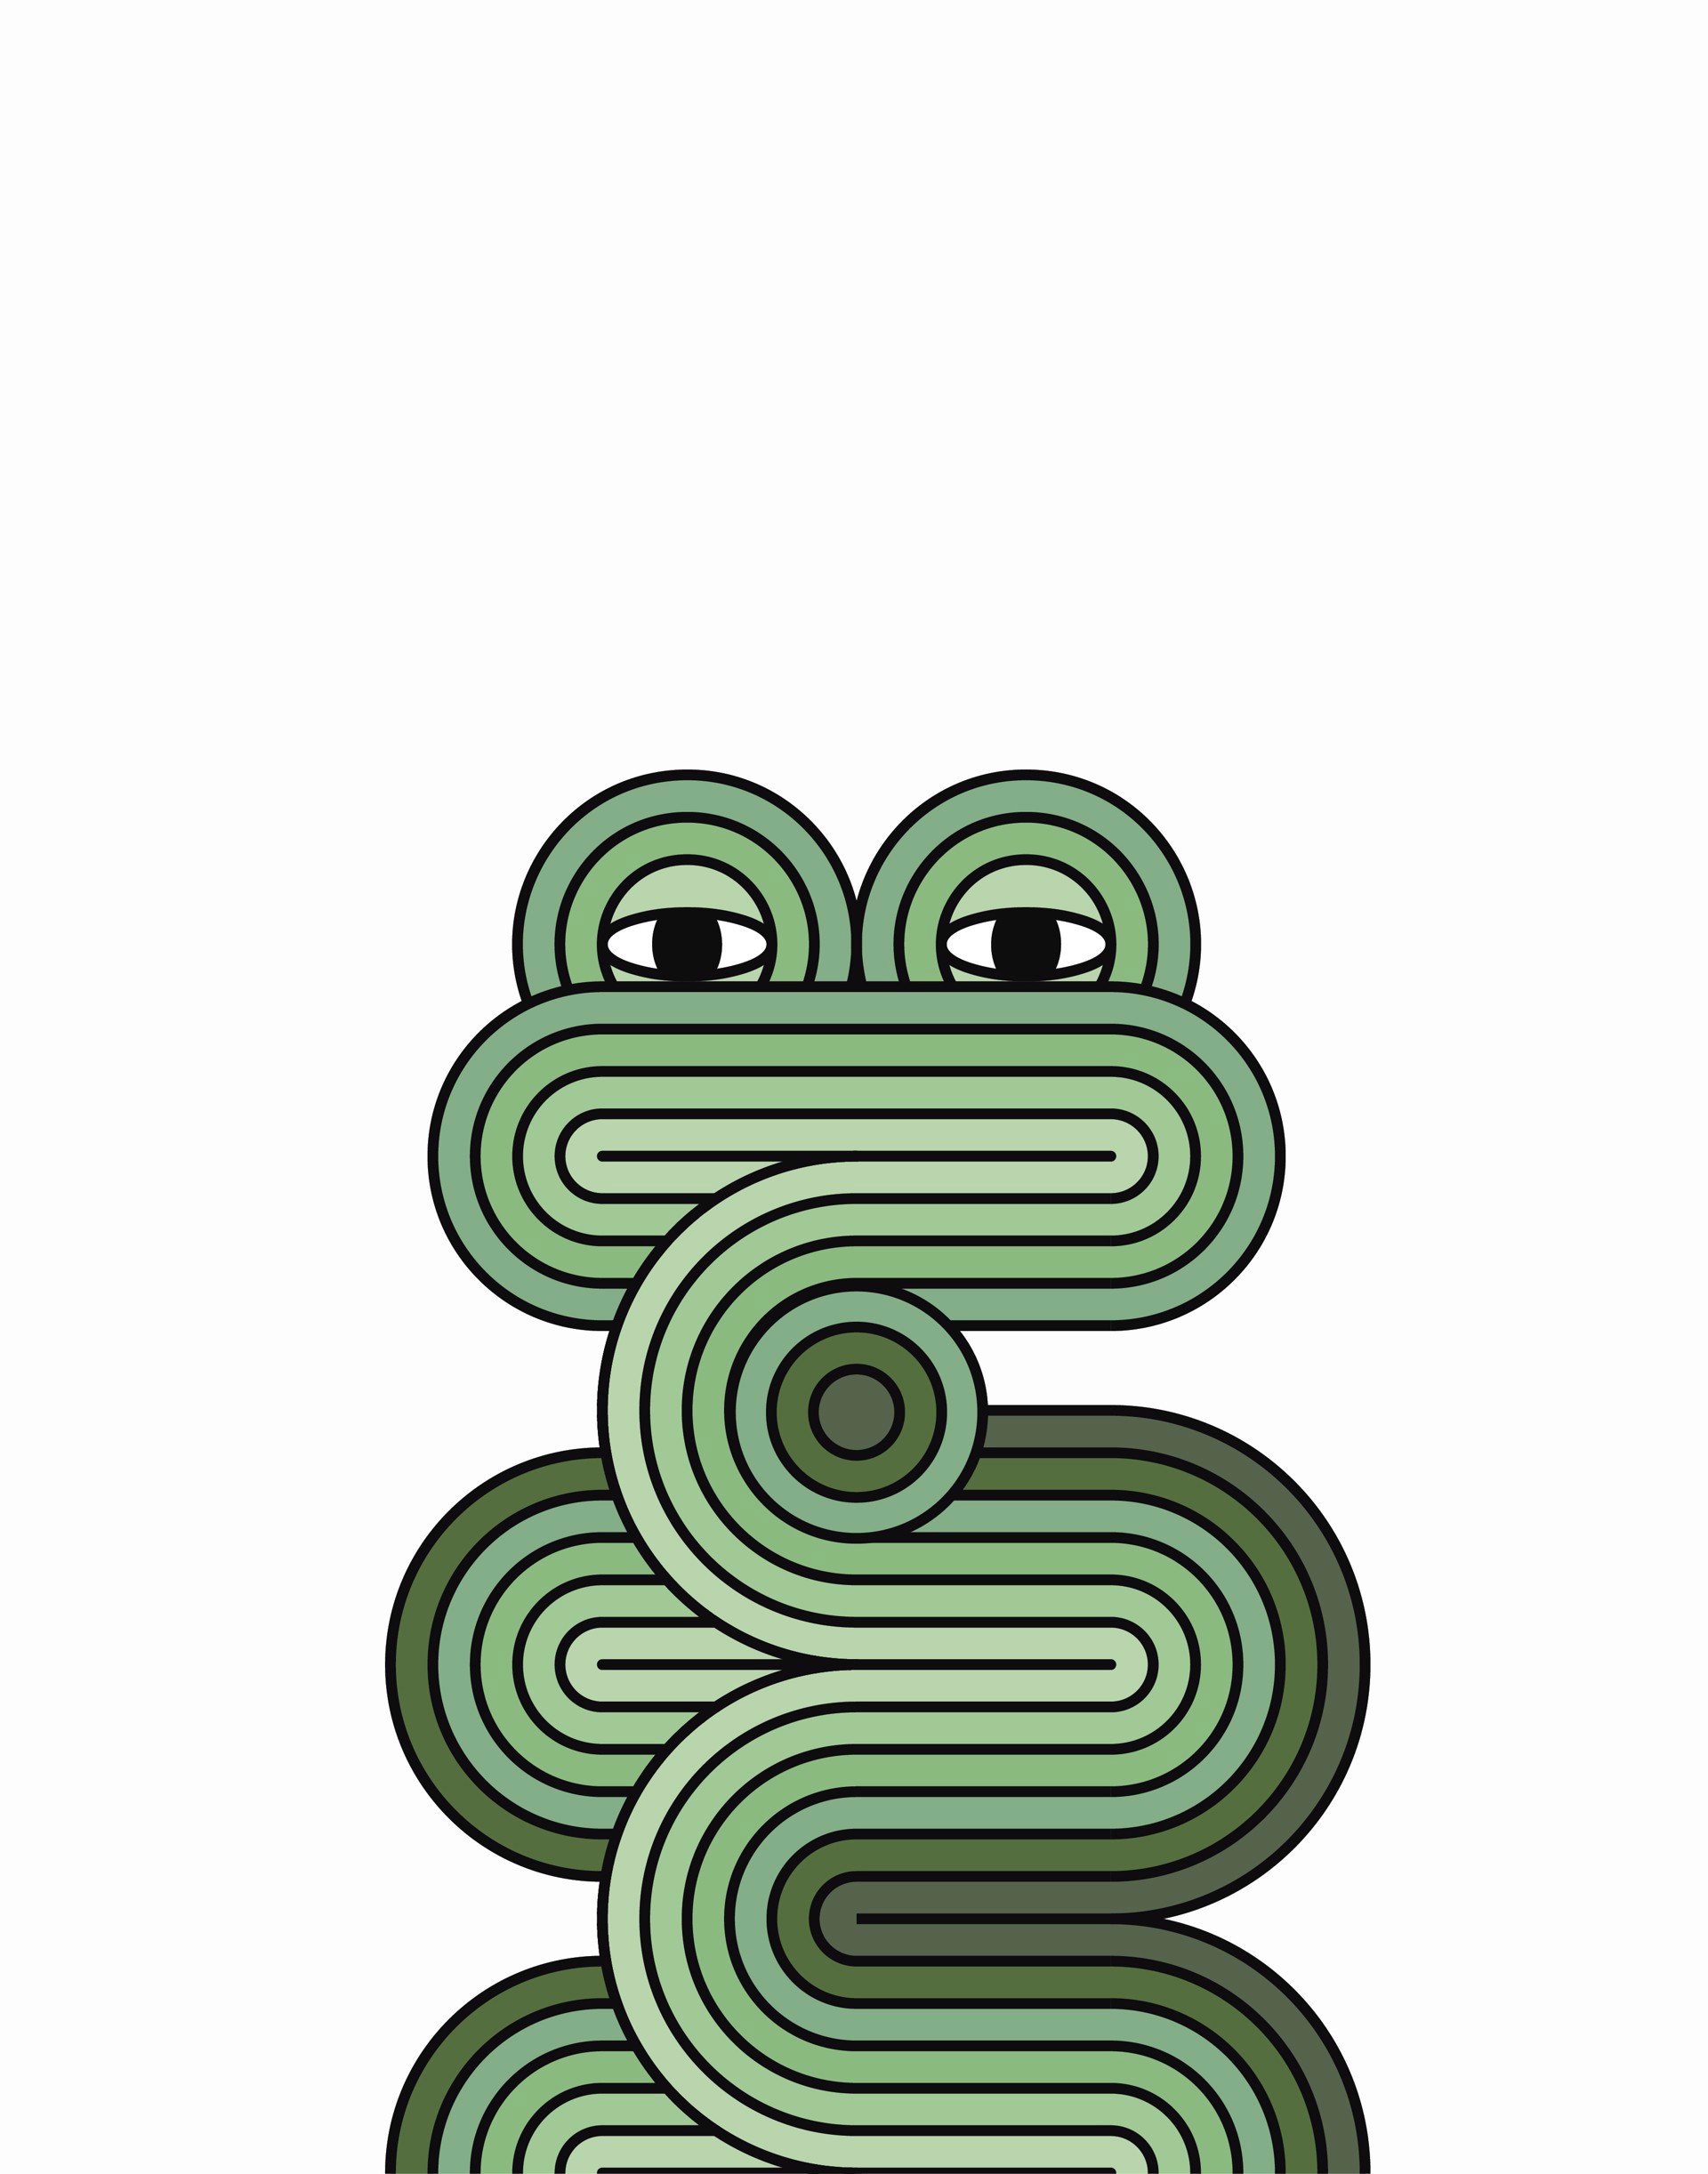 Frog 4/50 by Brock Wilson